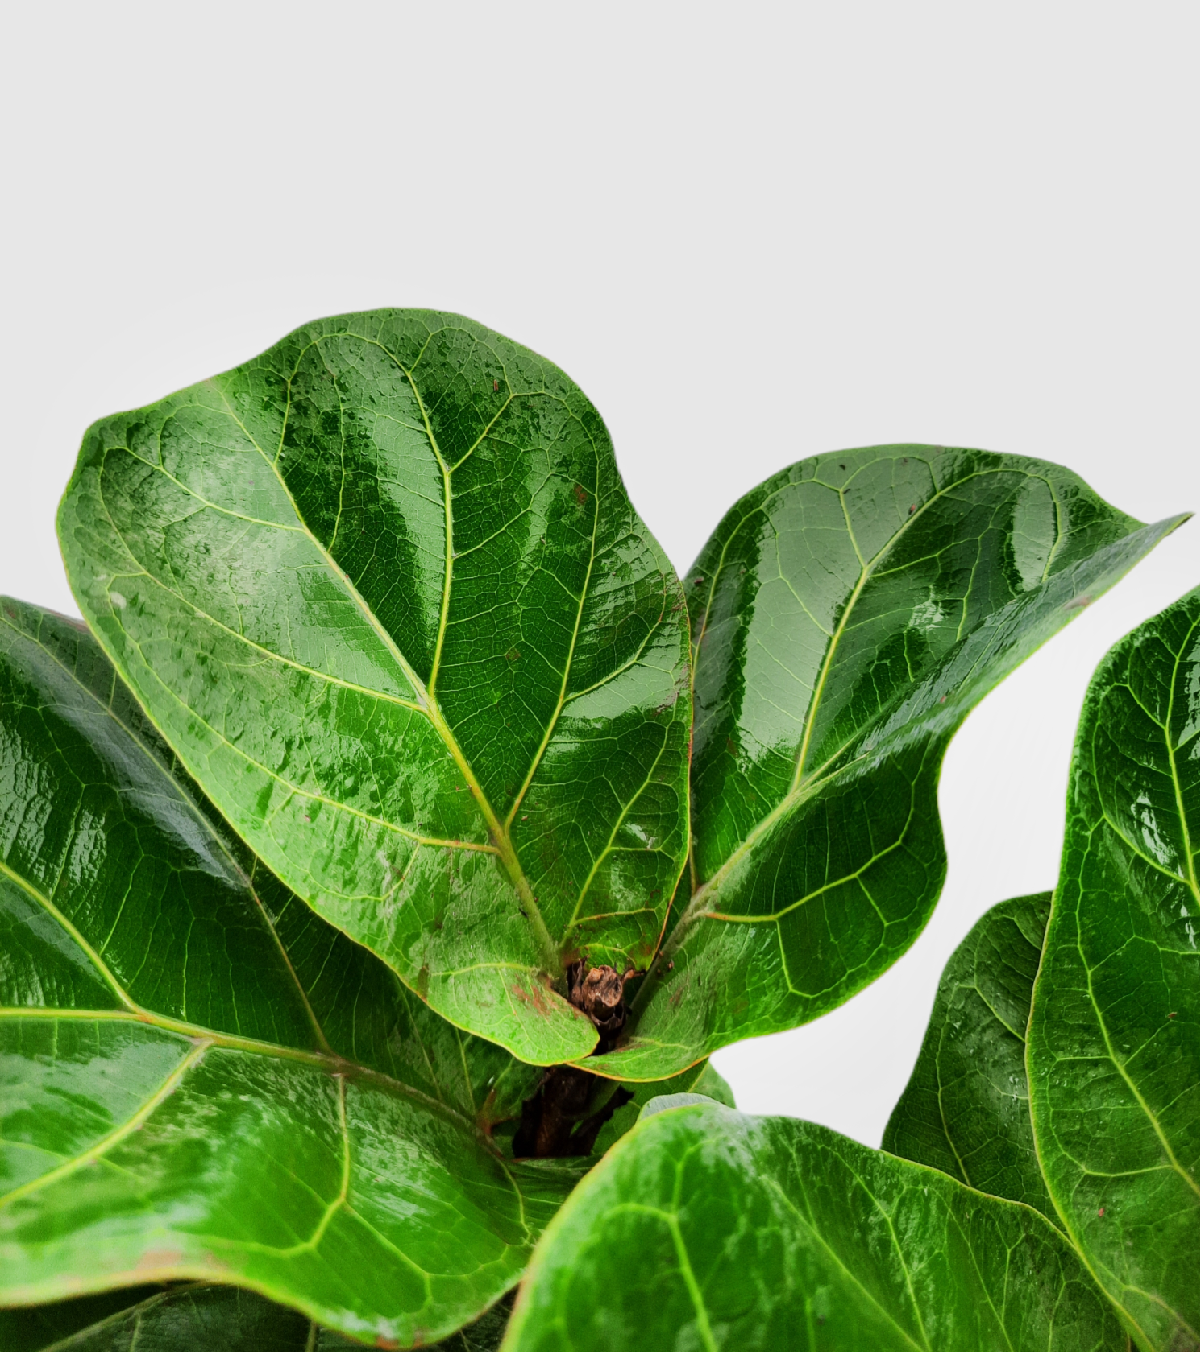 Fiddle leaf fig plant - Ficus Lyrata